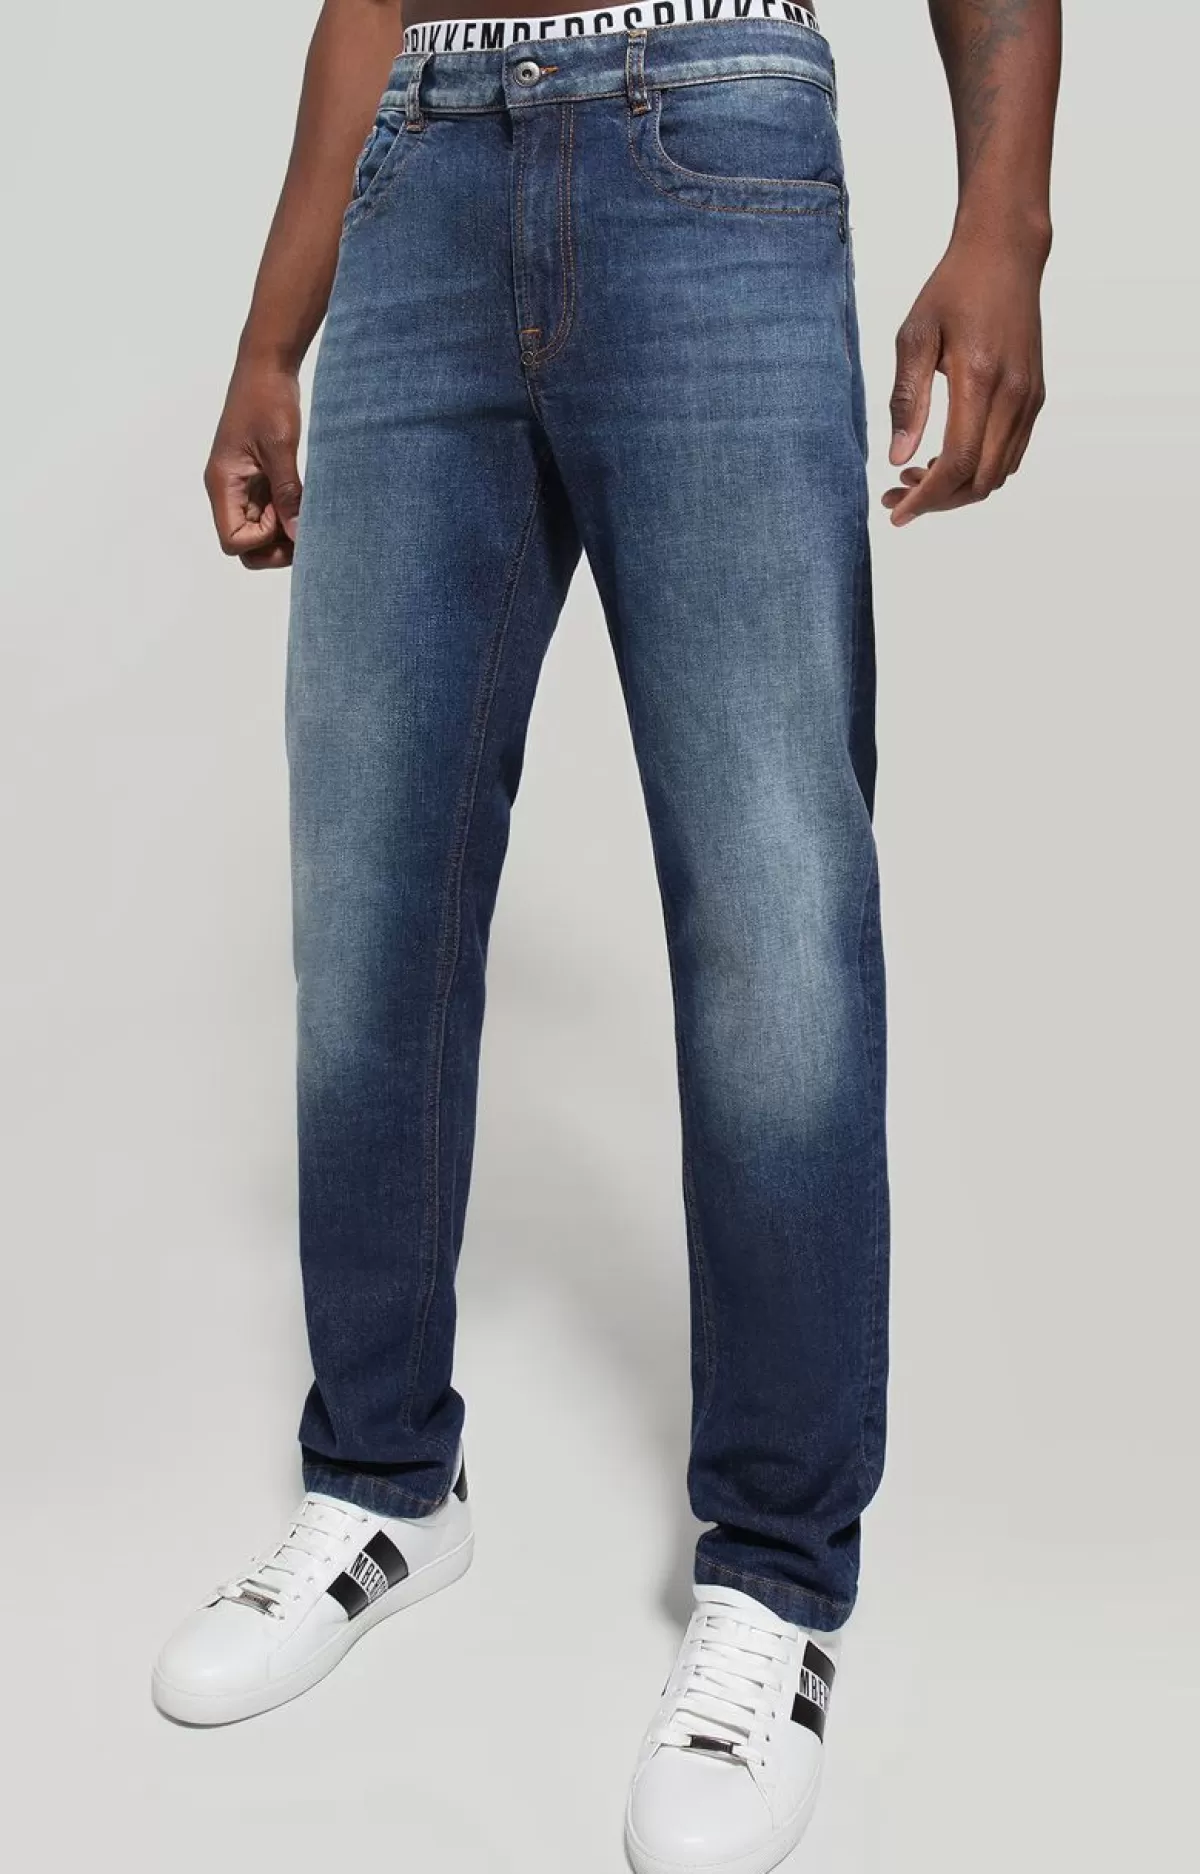 Bikkembergs Men'S Jeans - Regular Fit With Decorated Pockets Blue Denim Cheap